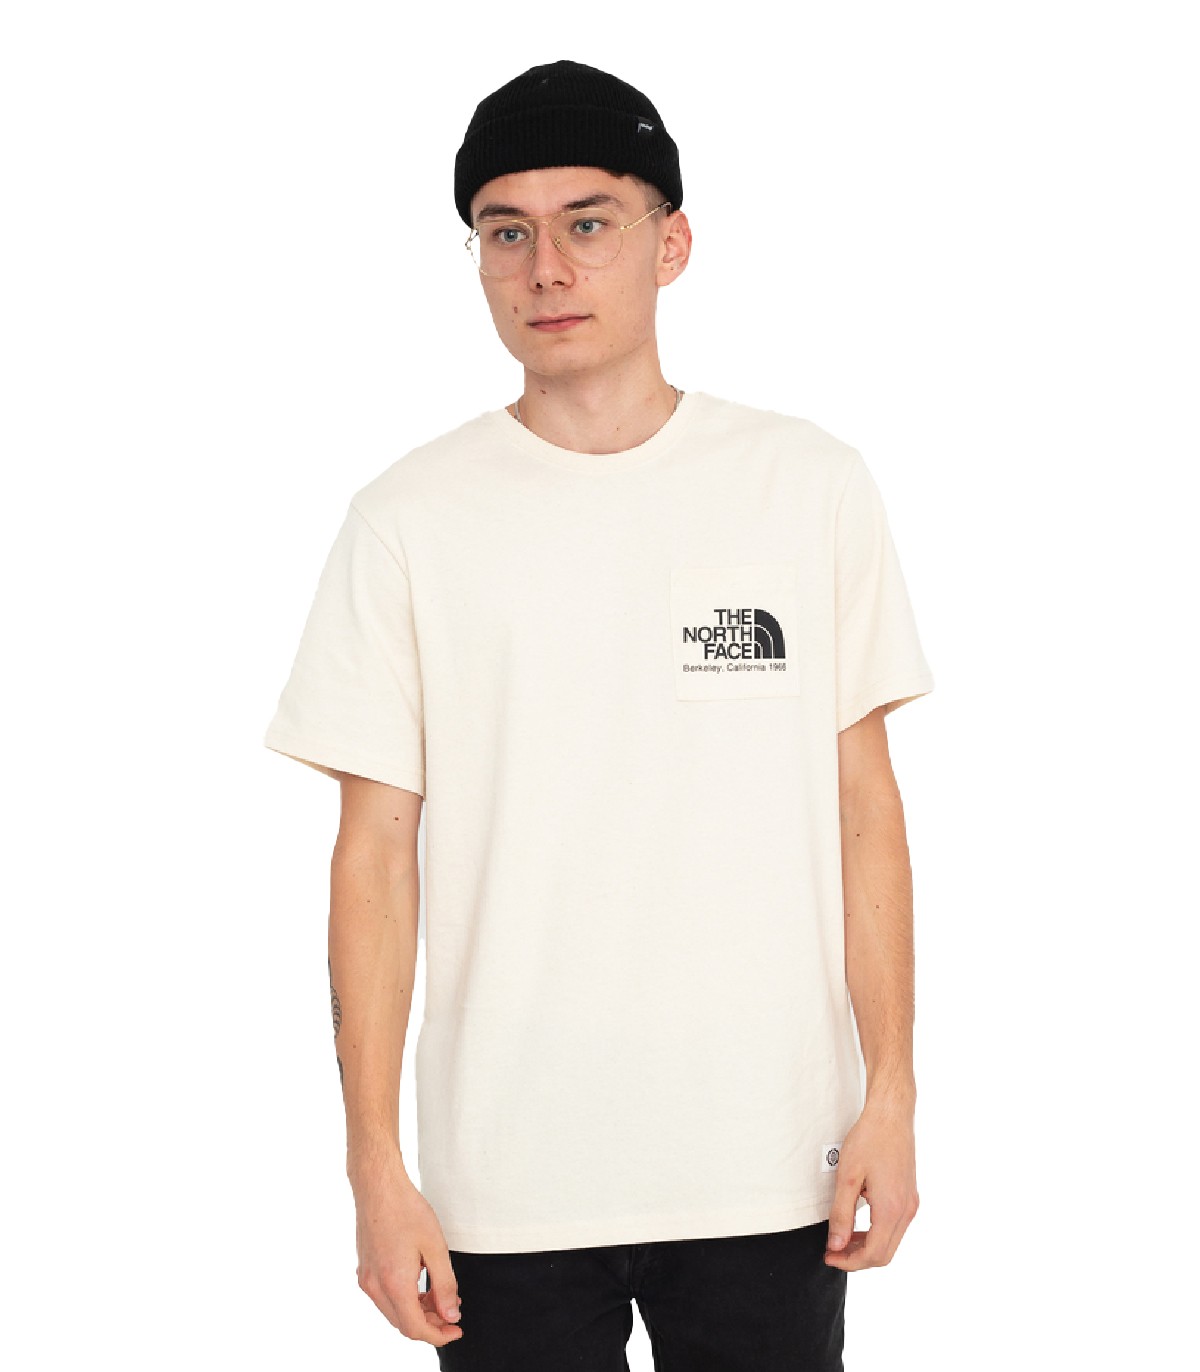 The North Face - Camiseta Berkeley California Pocket - Blanco